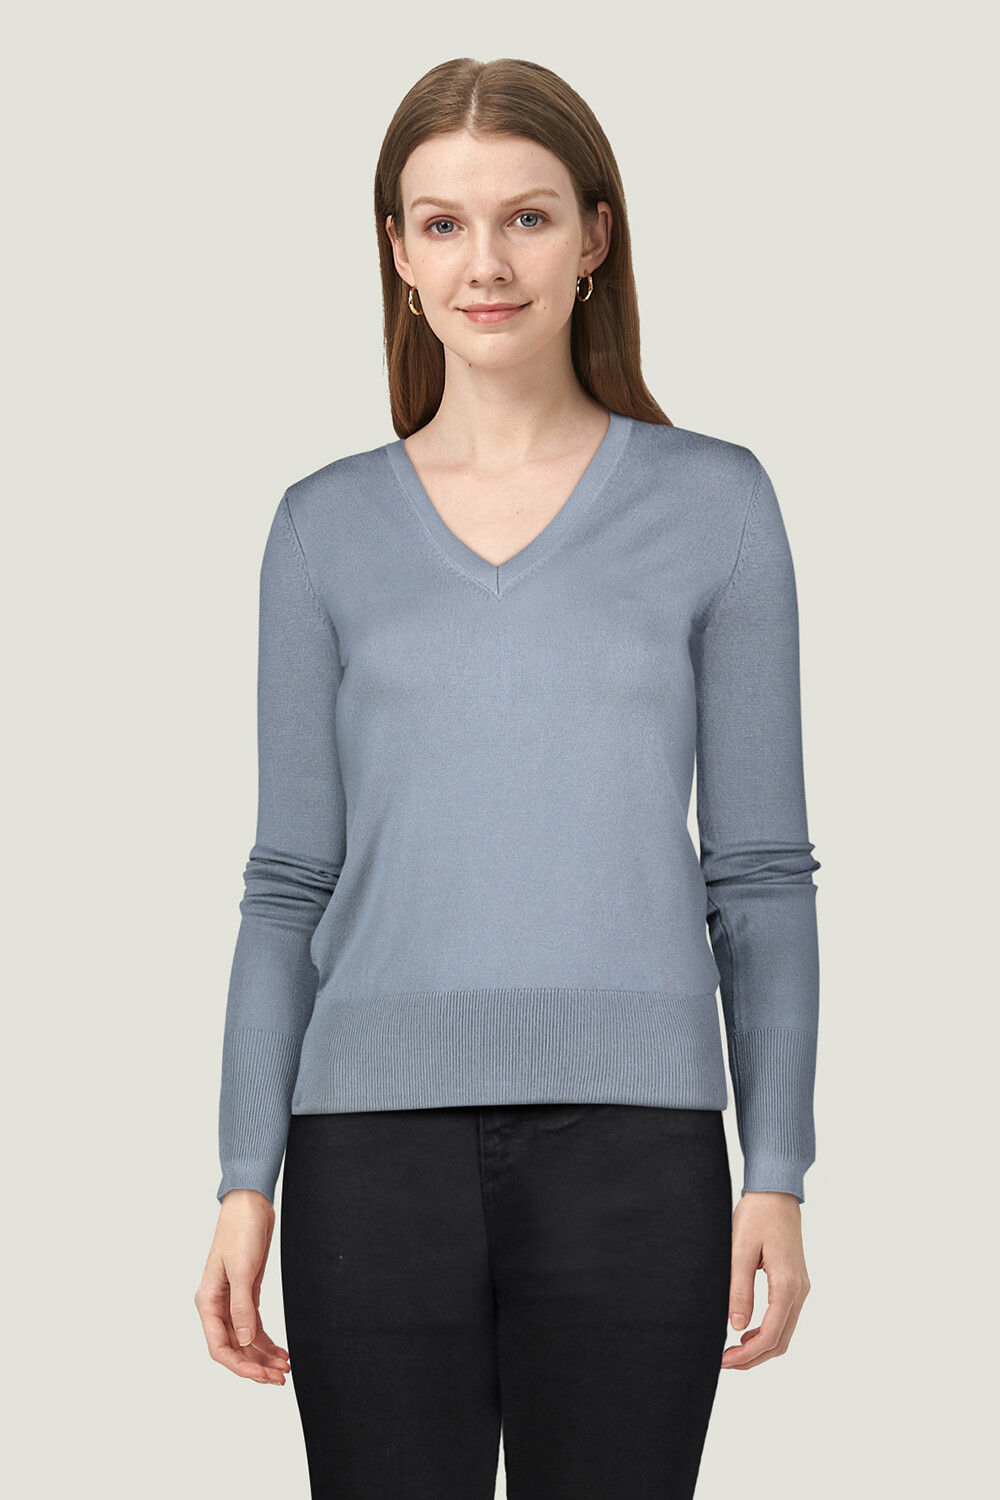 Sweater Irvine Azul Claro